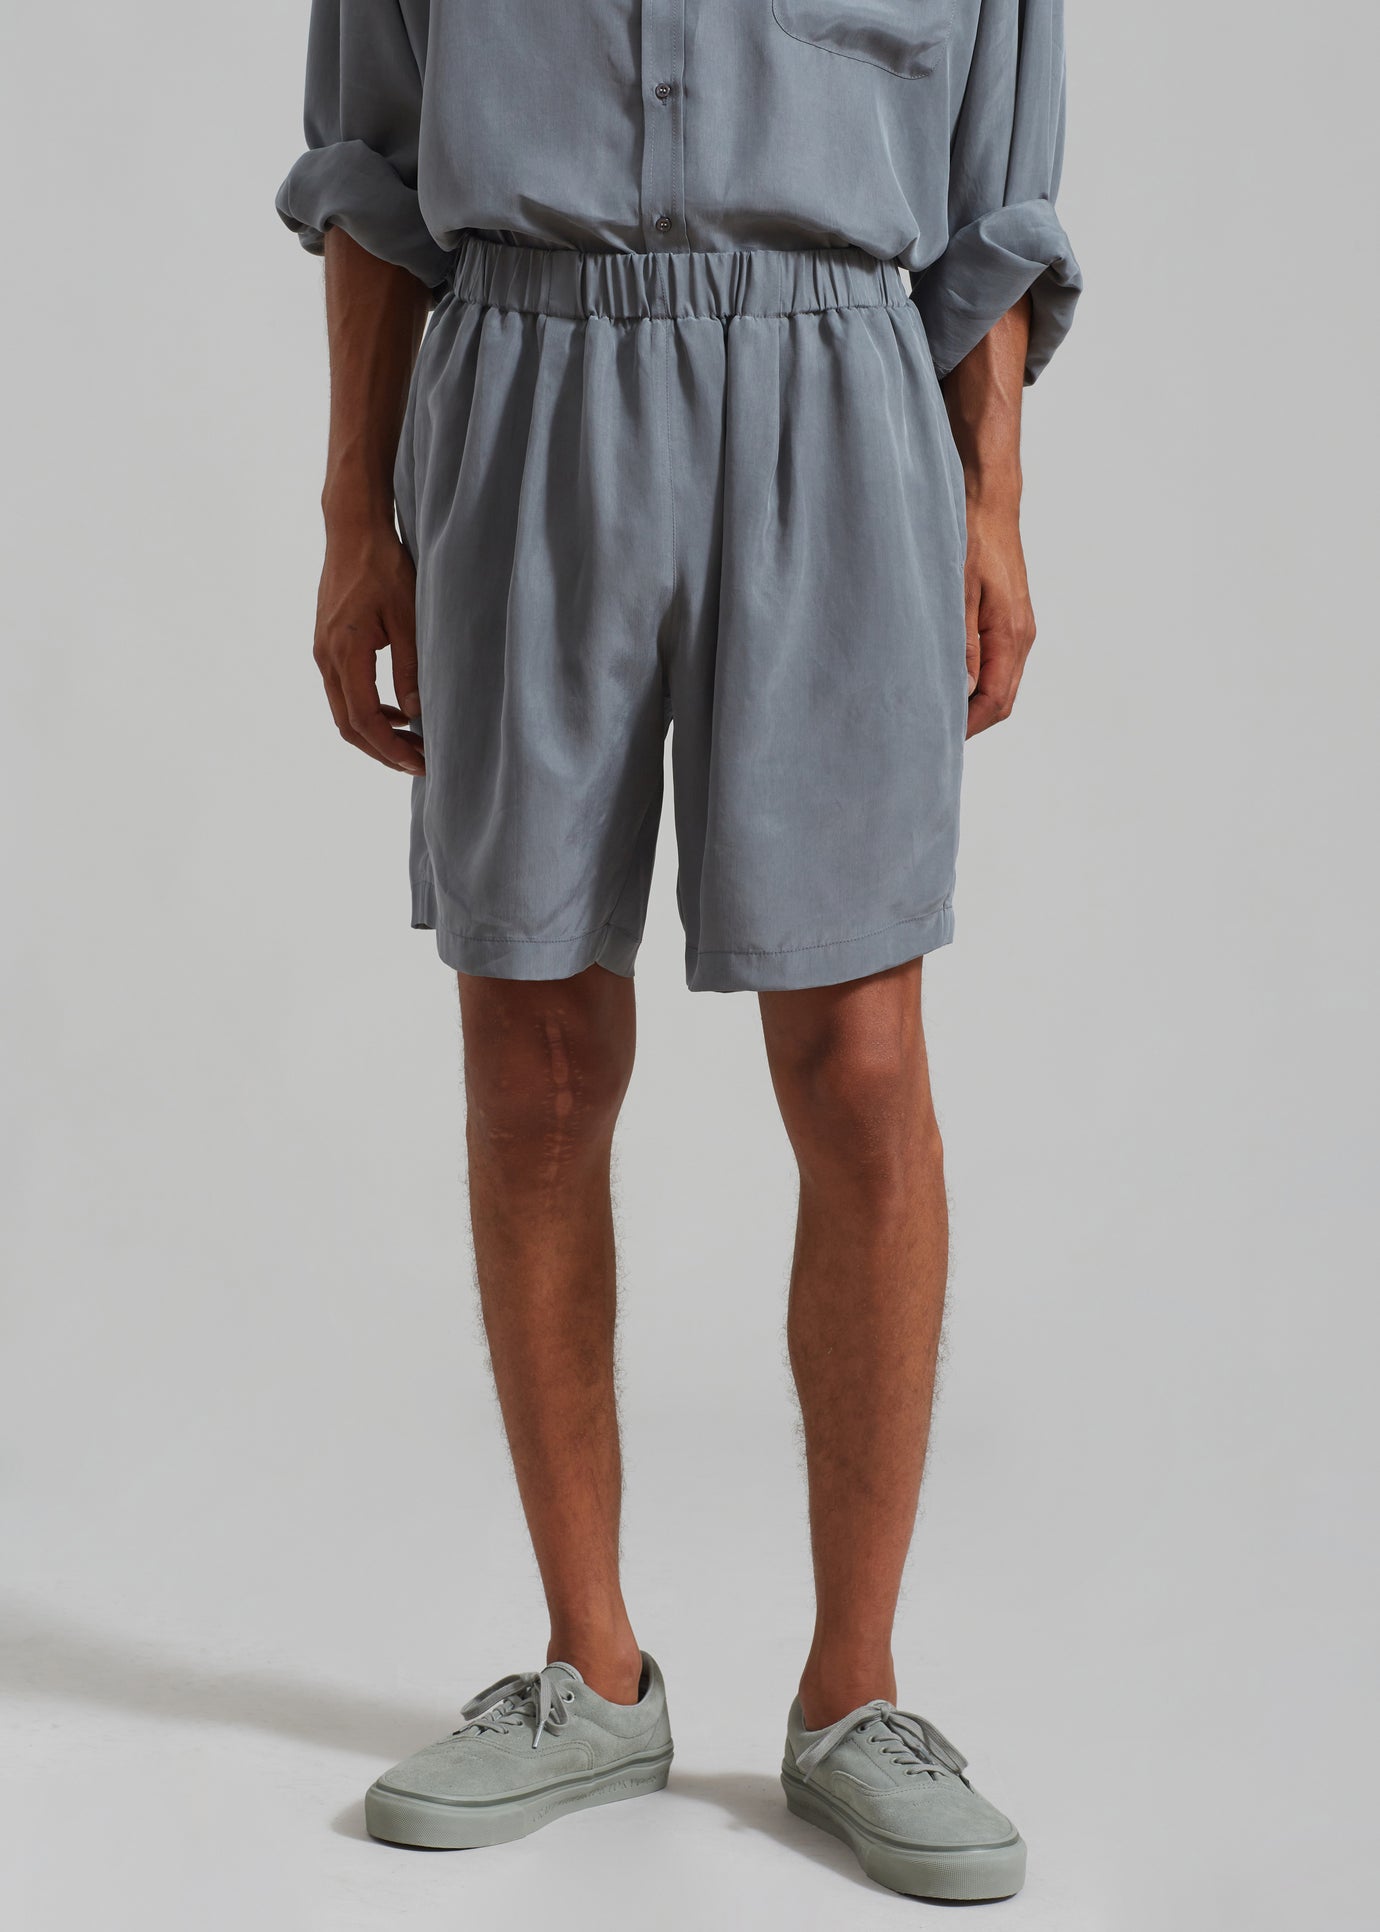 Leland Silky Boxer Shorts - Charcoal - 1